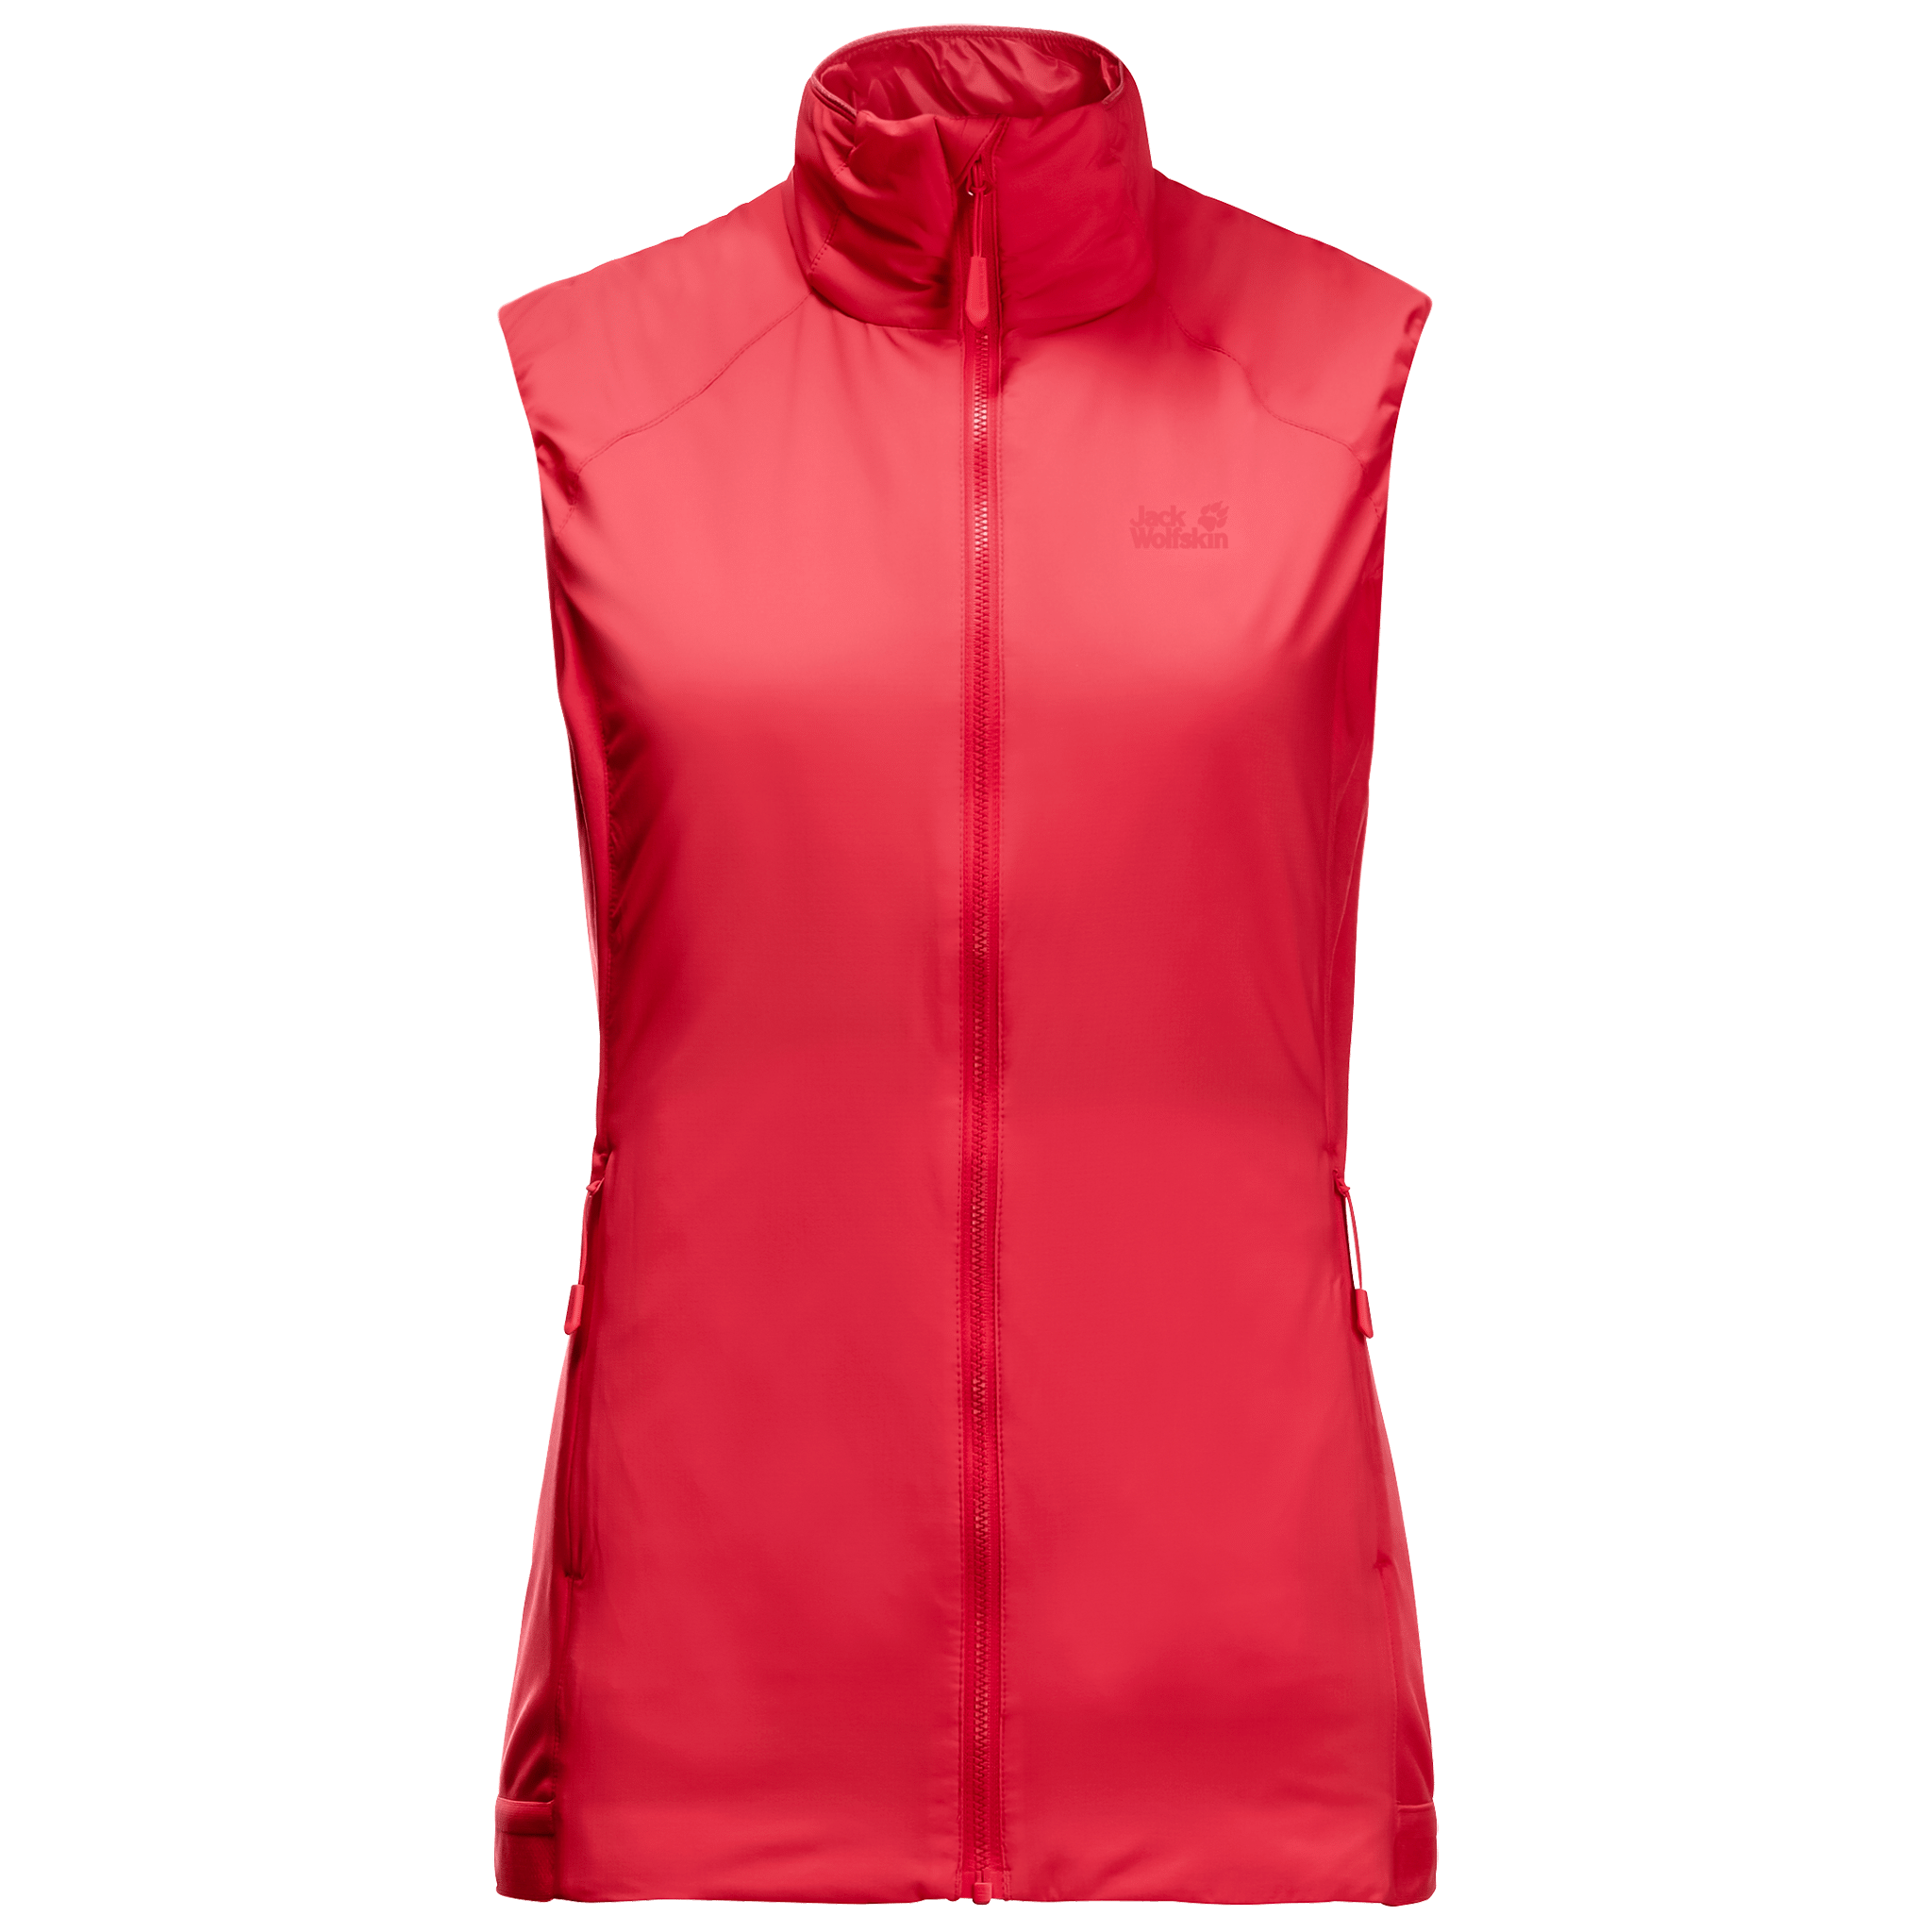 Tulip Red Windproof Insulated Vest Women